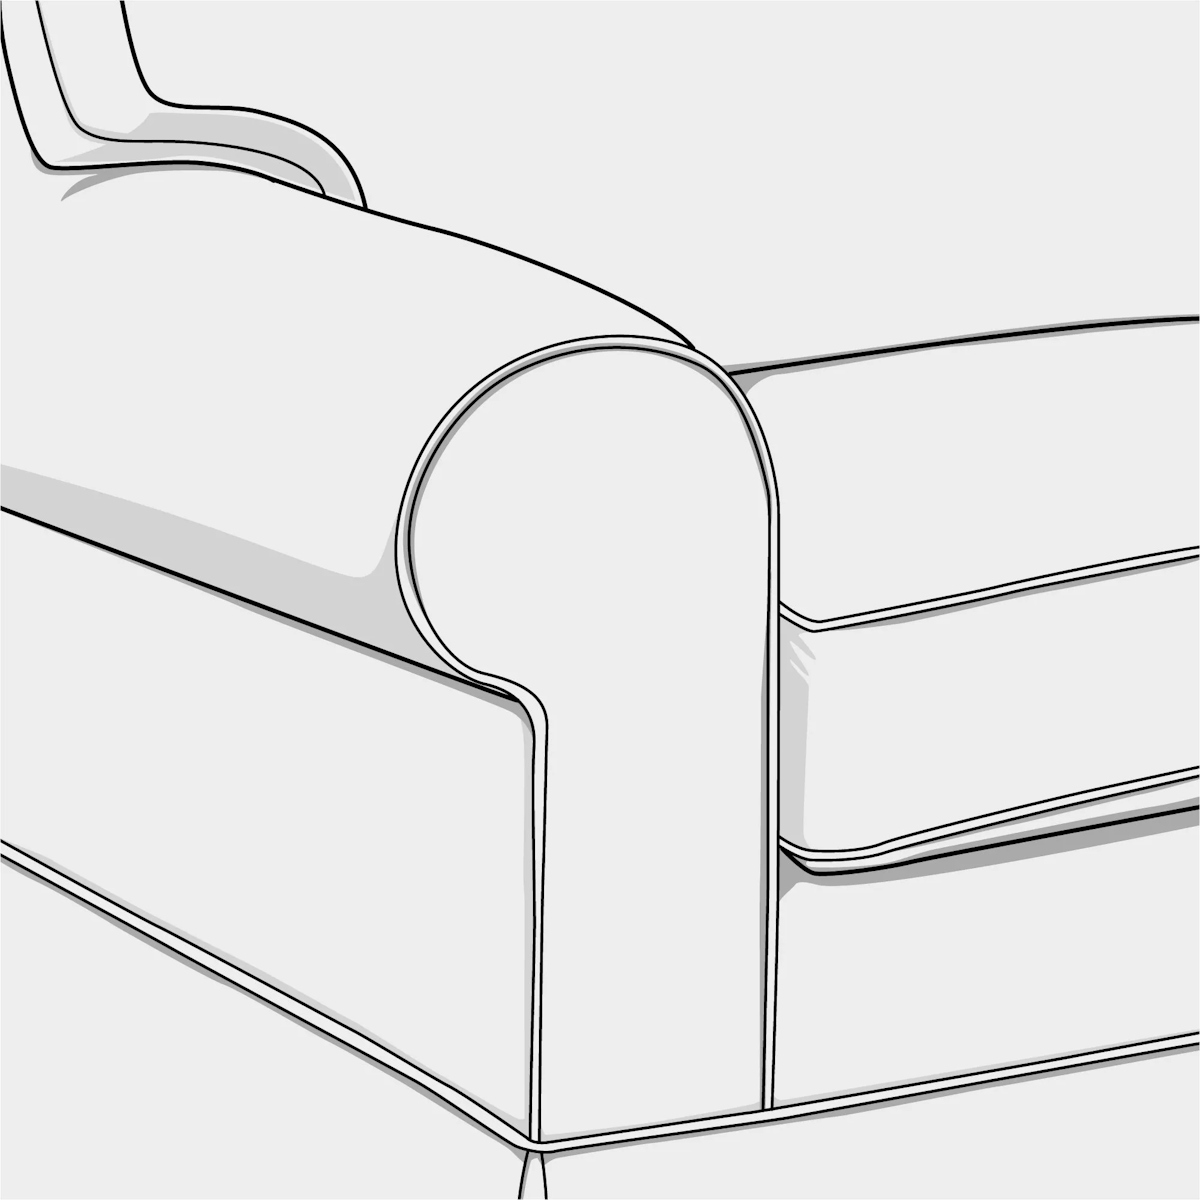 Illustration of sock arm style sofa